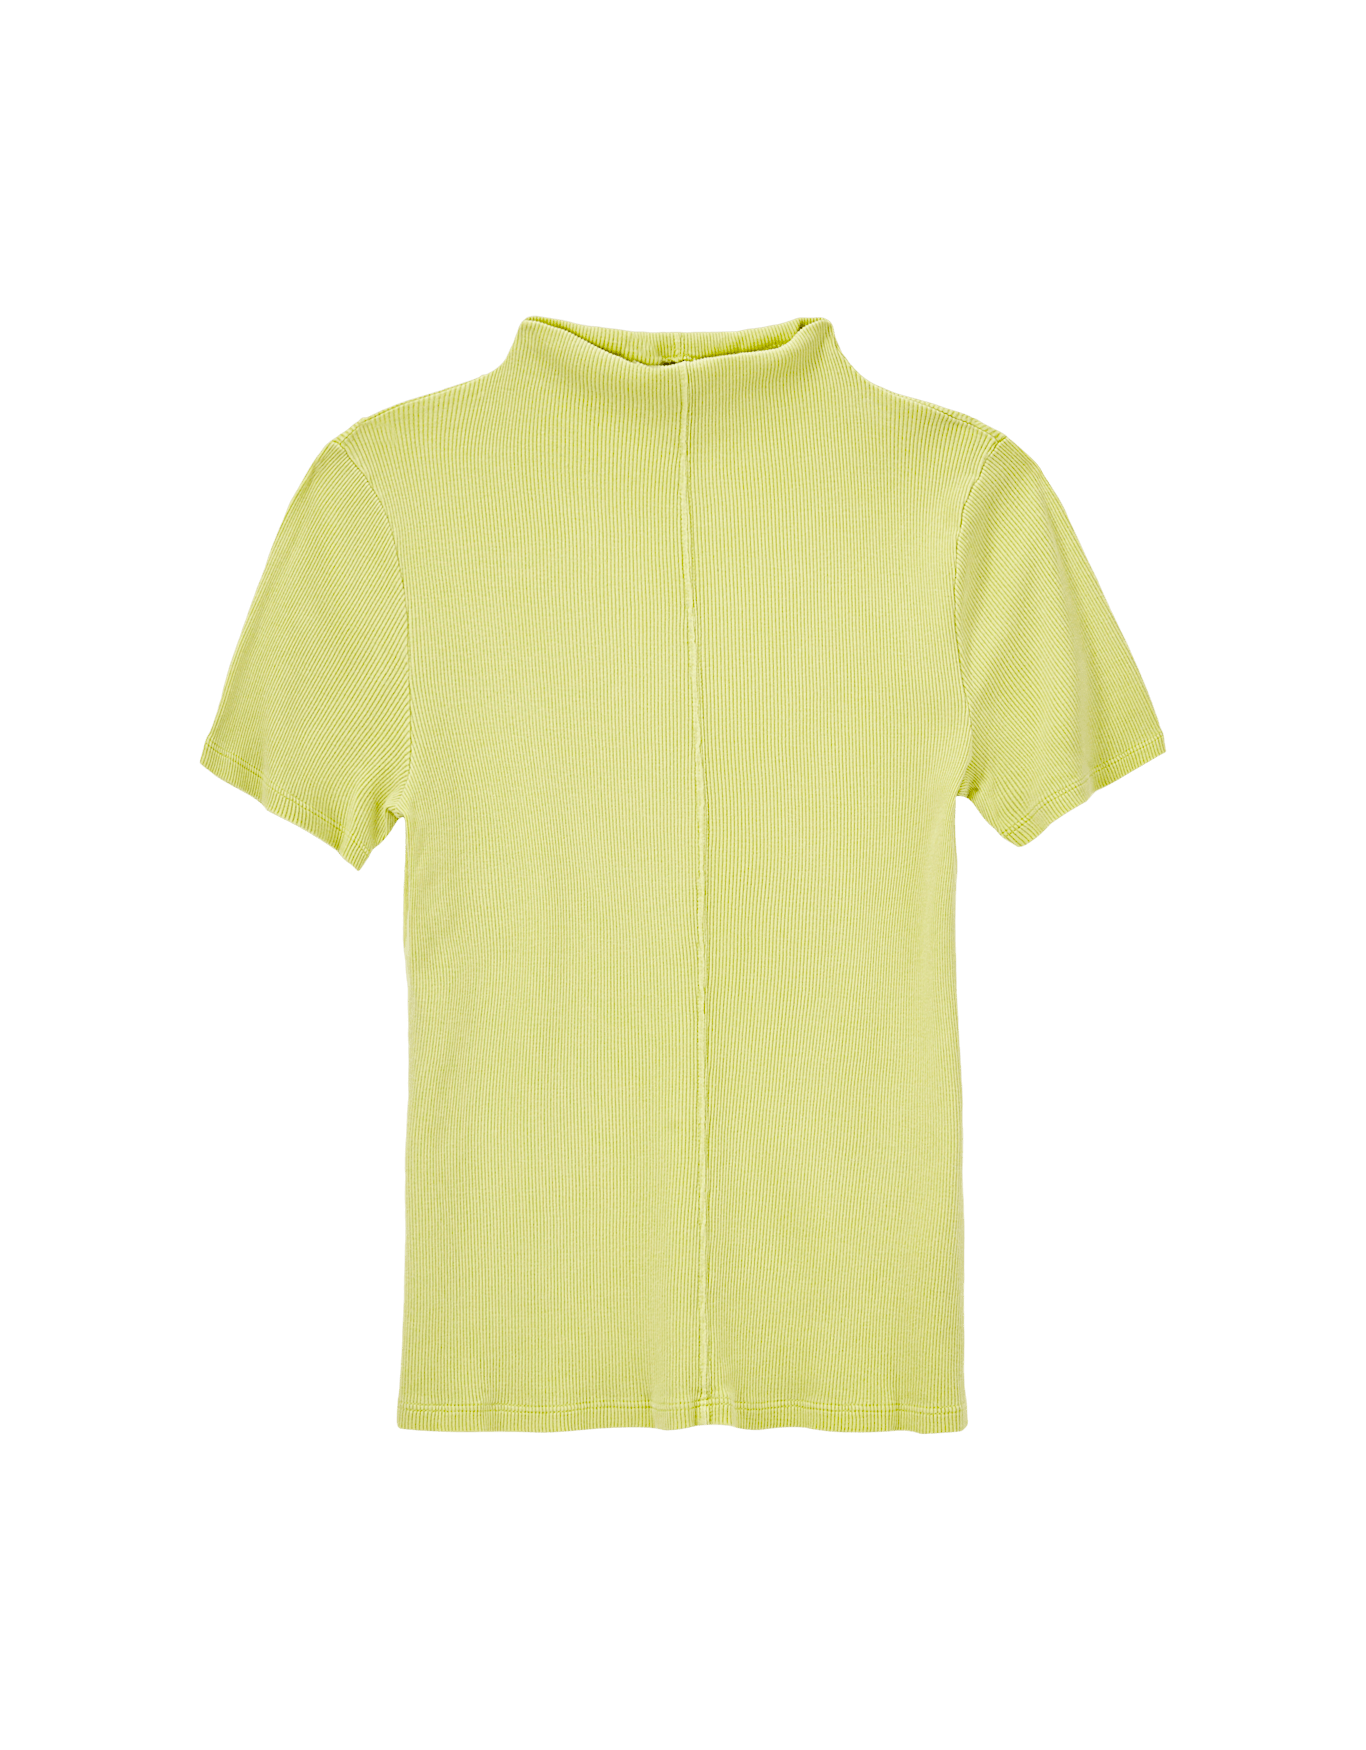 T-shirt rib - camisetas - SHOULDER